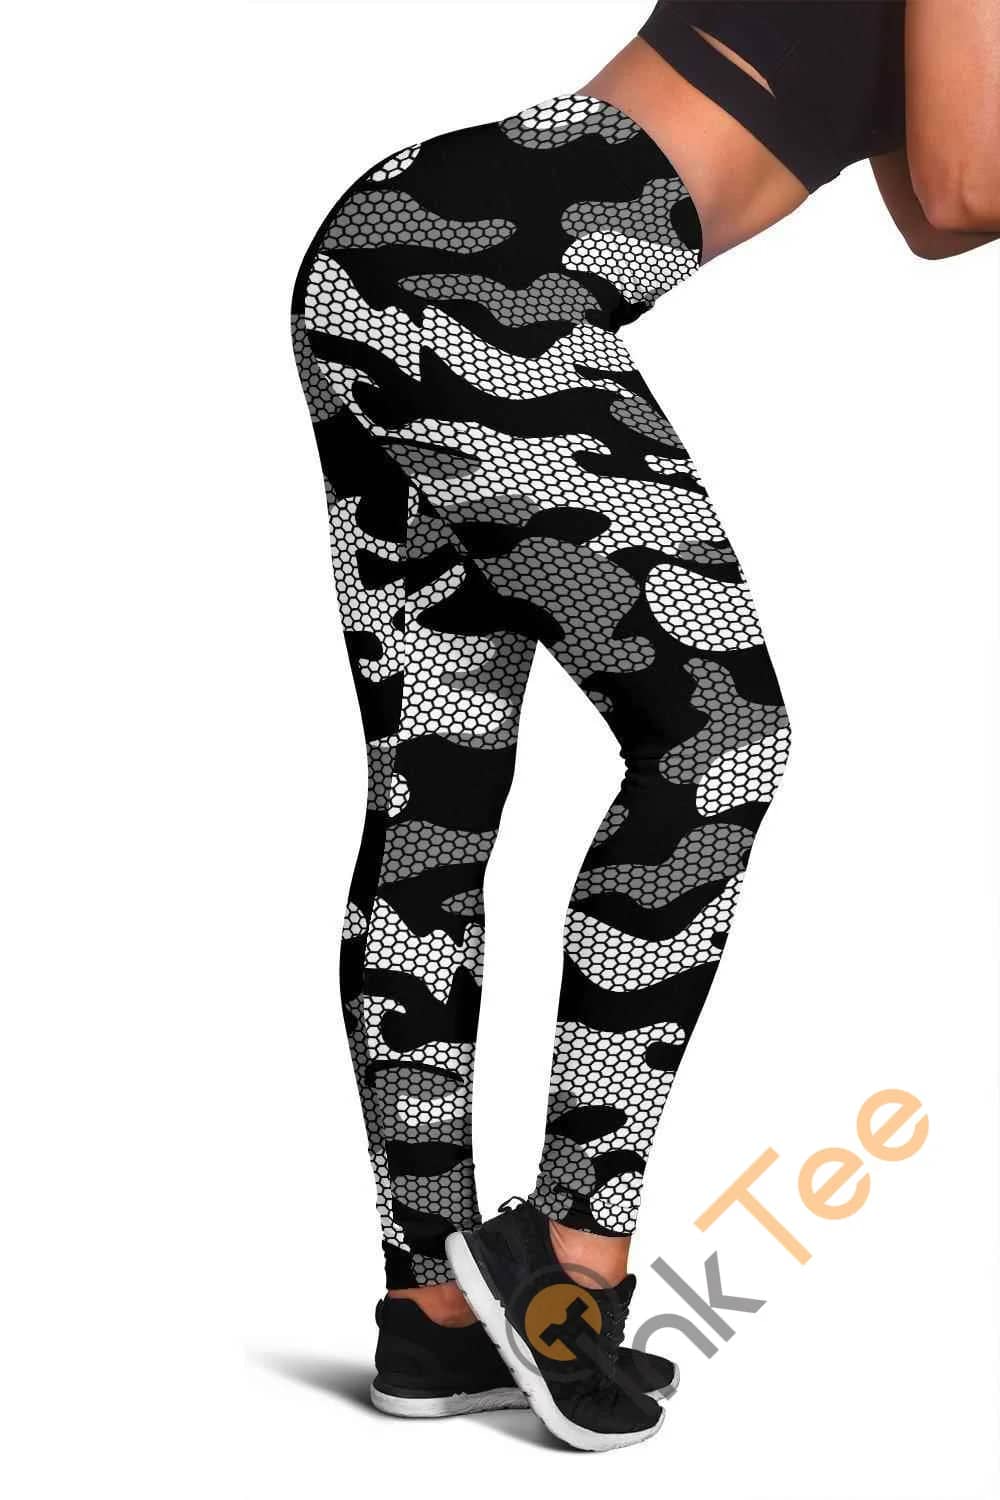 Oakland Raiders Inspired Hex Camo 3D All Over Print For Yoga Fitness Fashion Women's Leggings